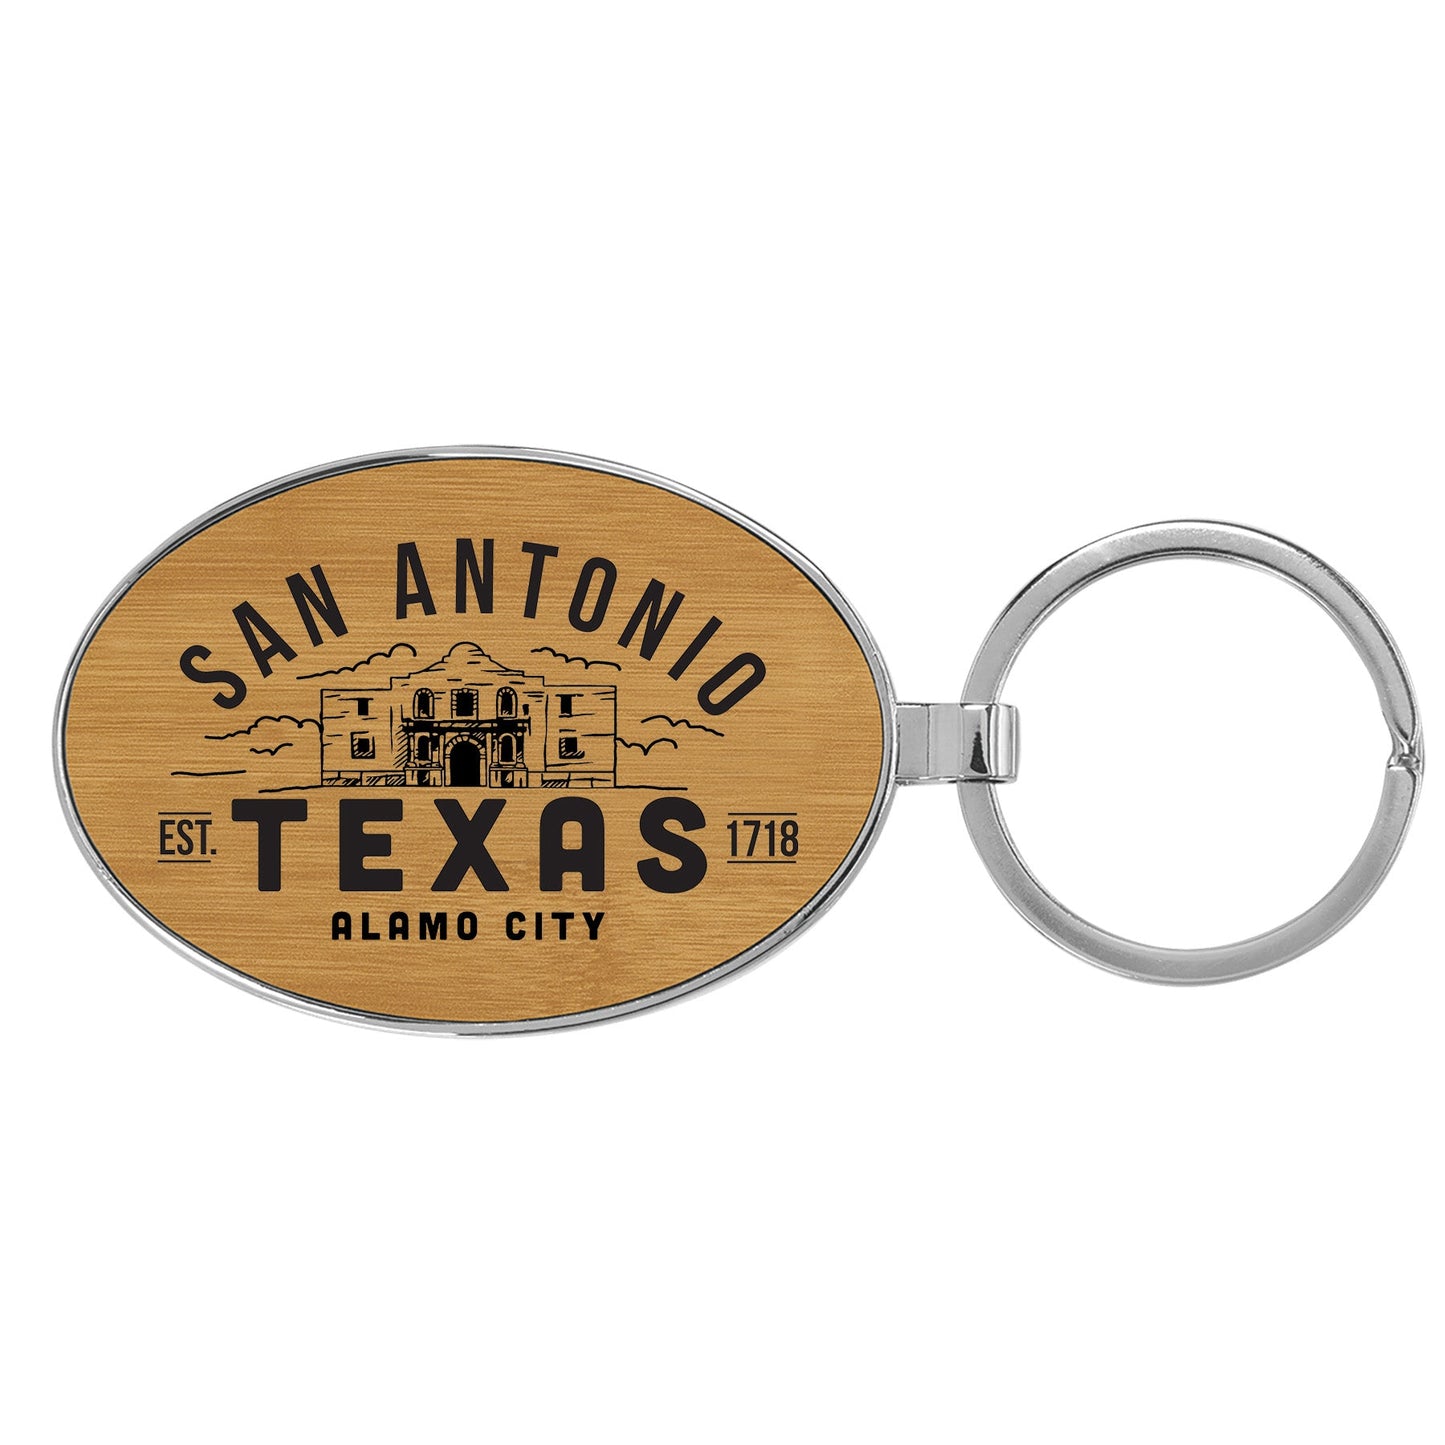 San Antonio Texas - Alamo City - Keychain